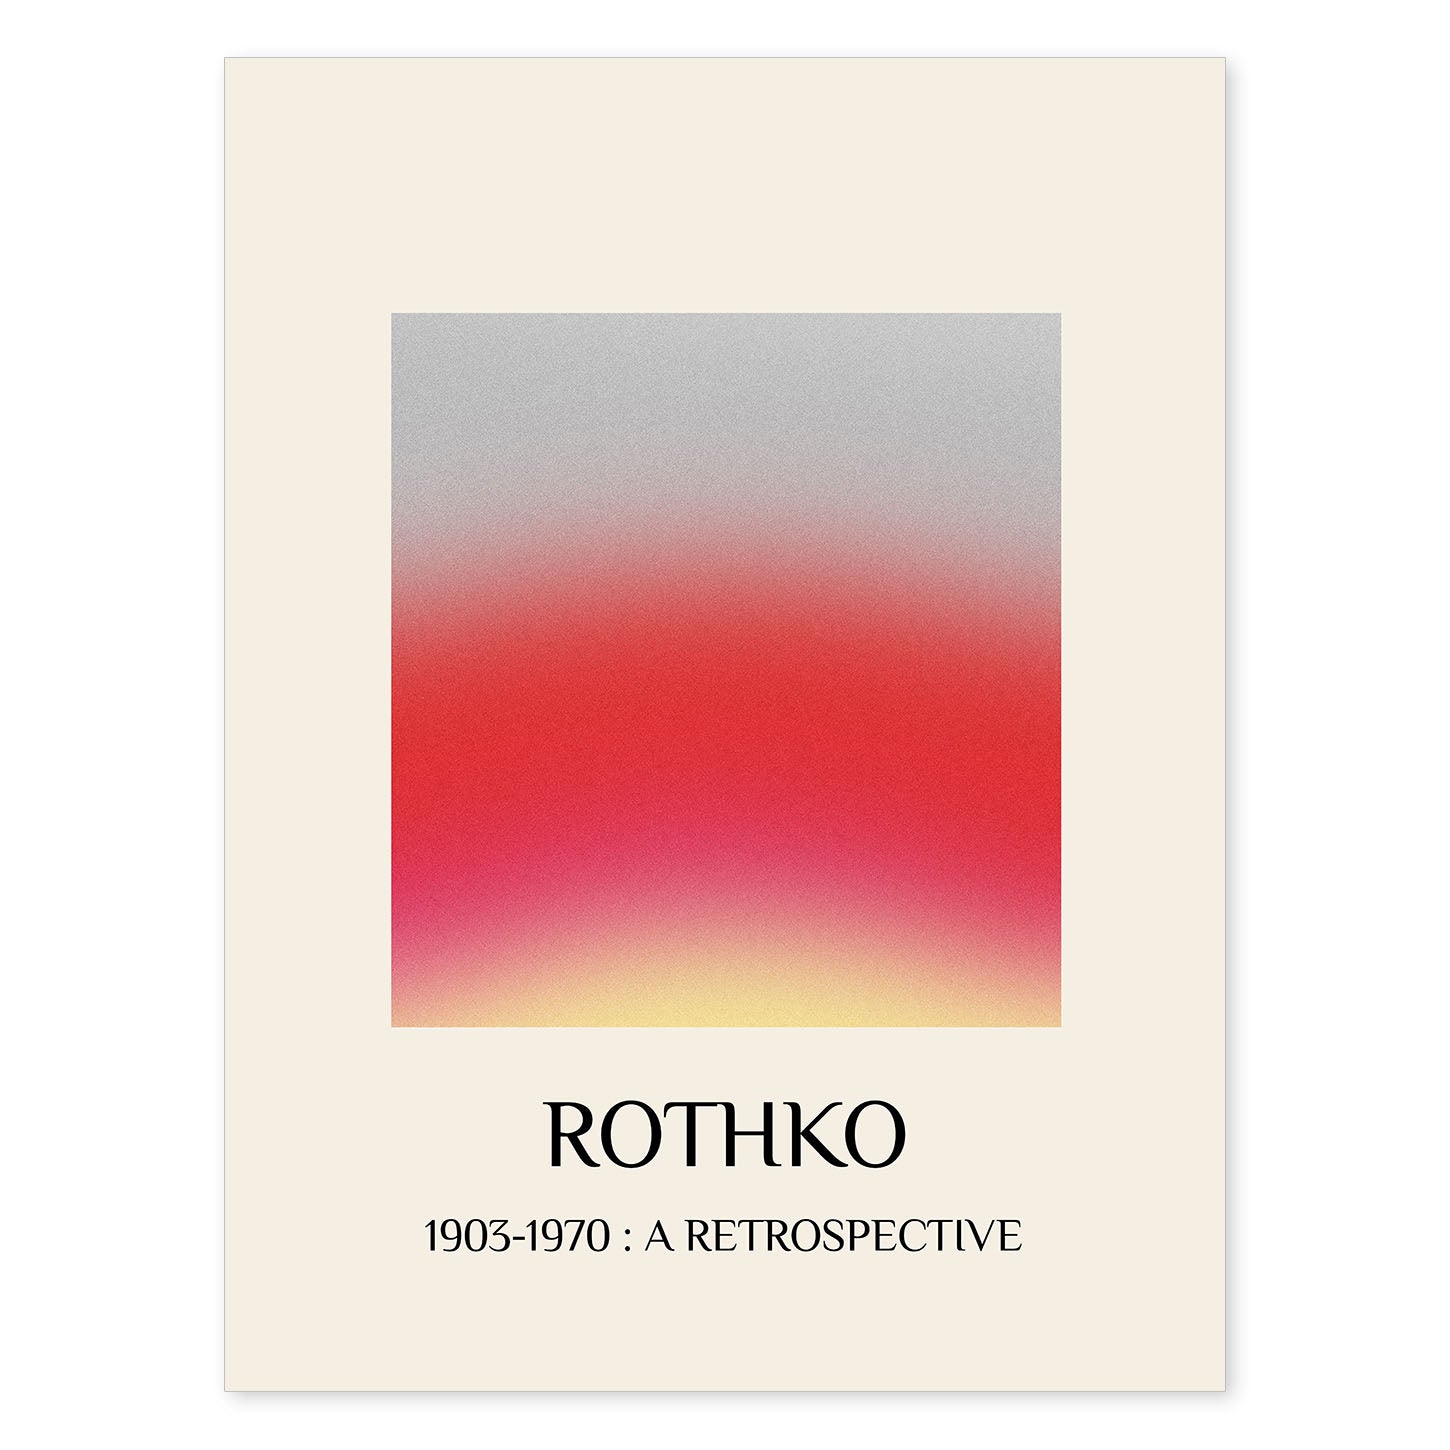 Lamina artistica decorativa con ilustración de Exposición Rothko 5 estilo expresionismo abstracto-Artwork-Nacnic-A4-Sin marco-Nacnic Estudio SL